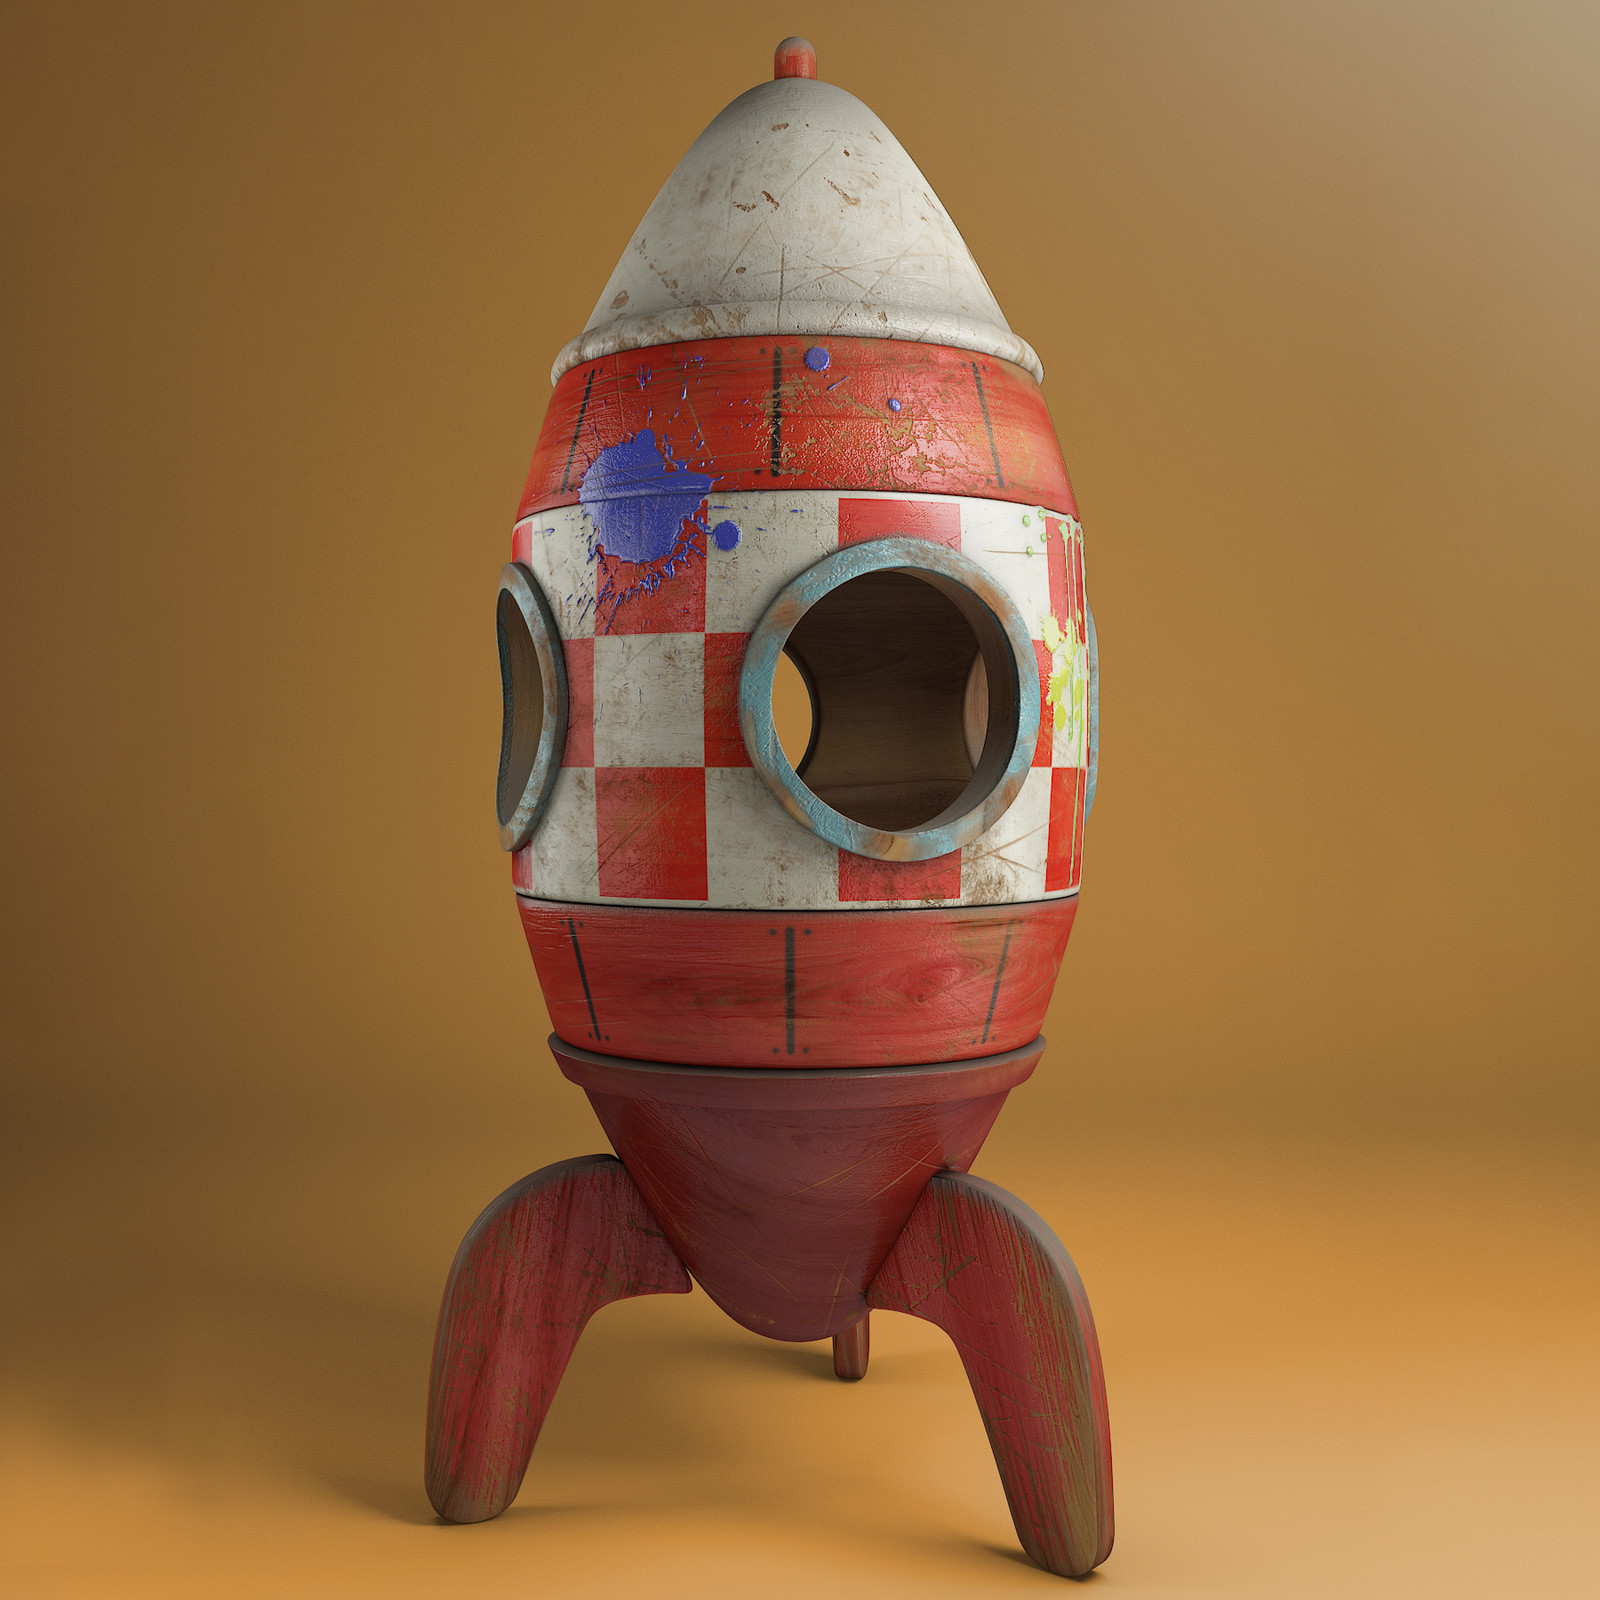 Rocket toy